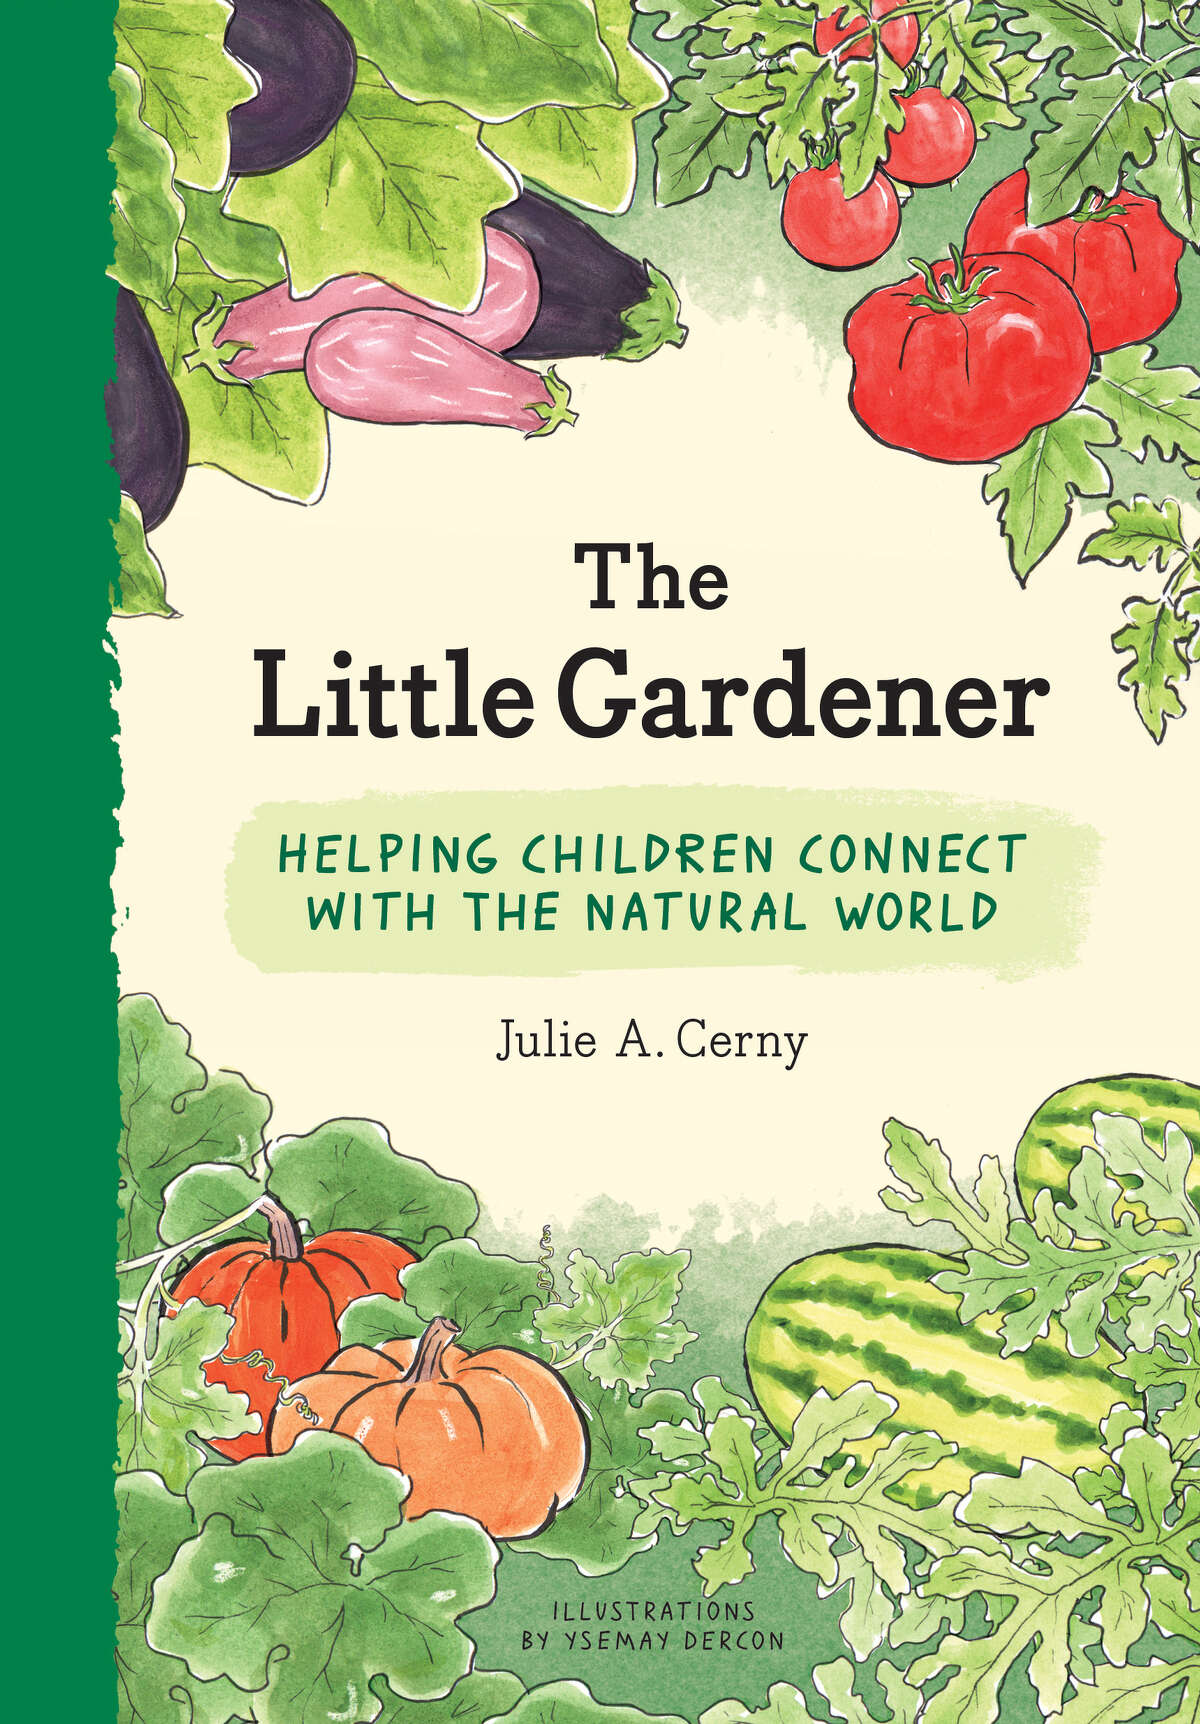 “The Little Gardener” by Julie Cerny.